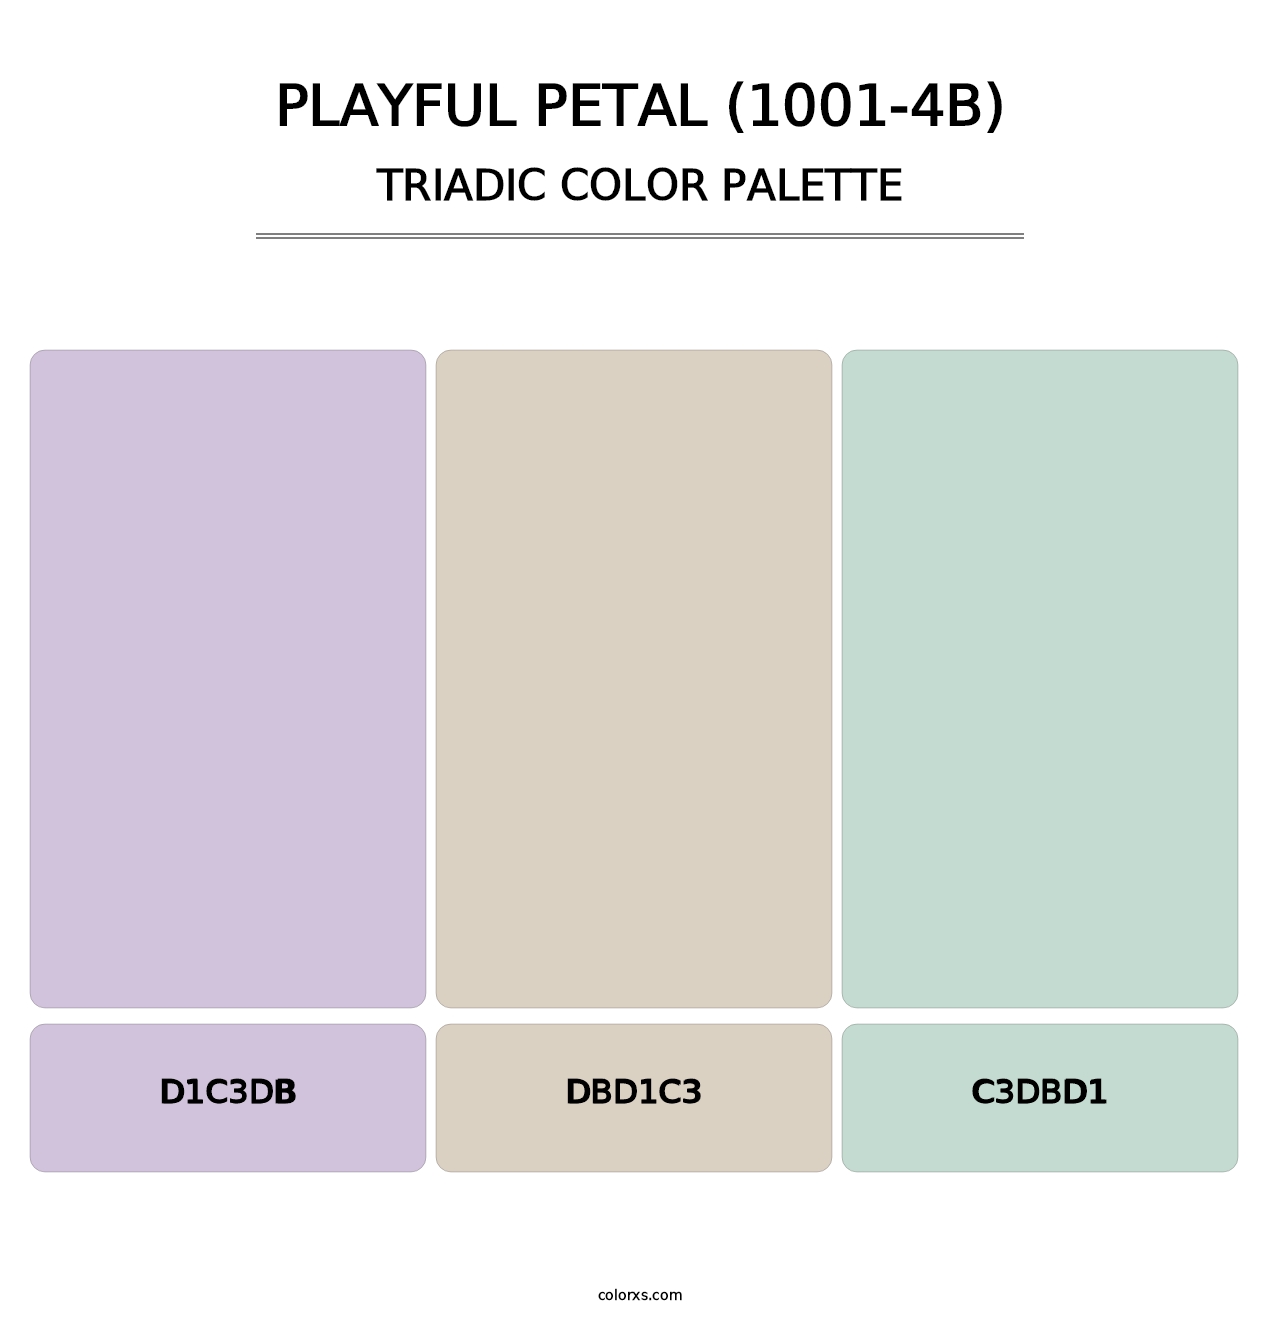 Playful Petal (1001-4B) - Triadic Color Palette